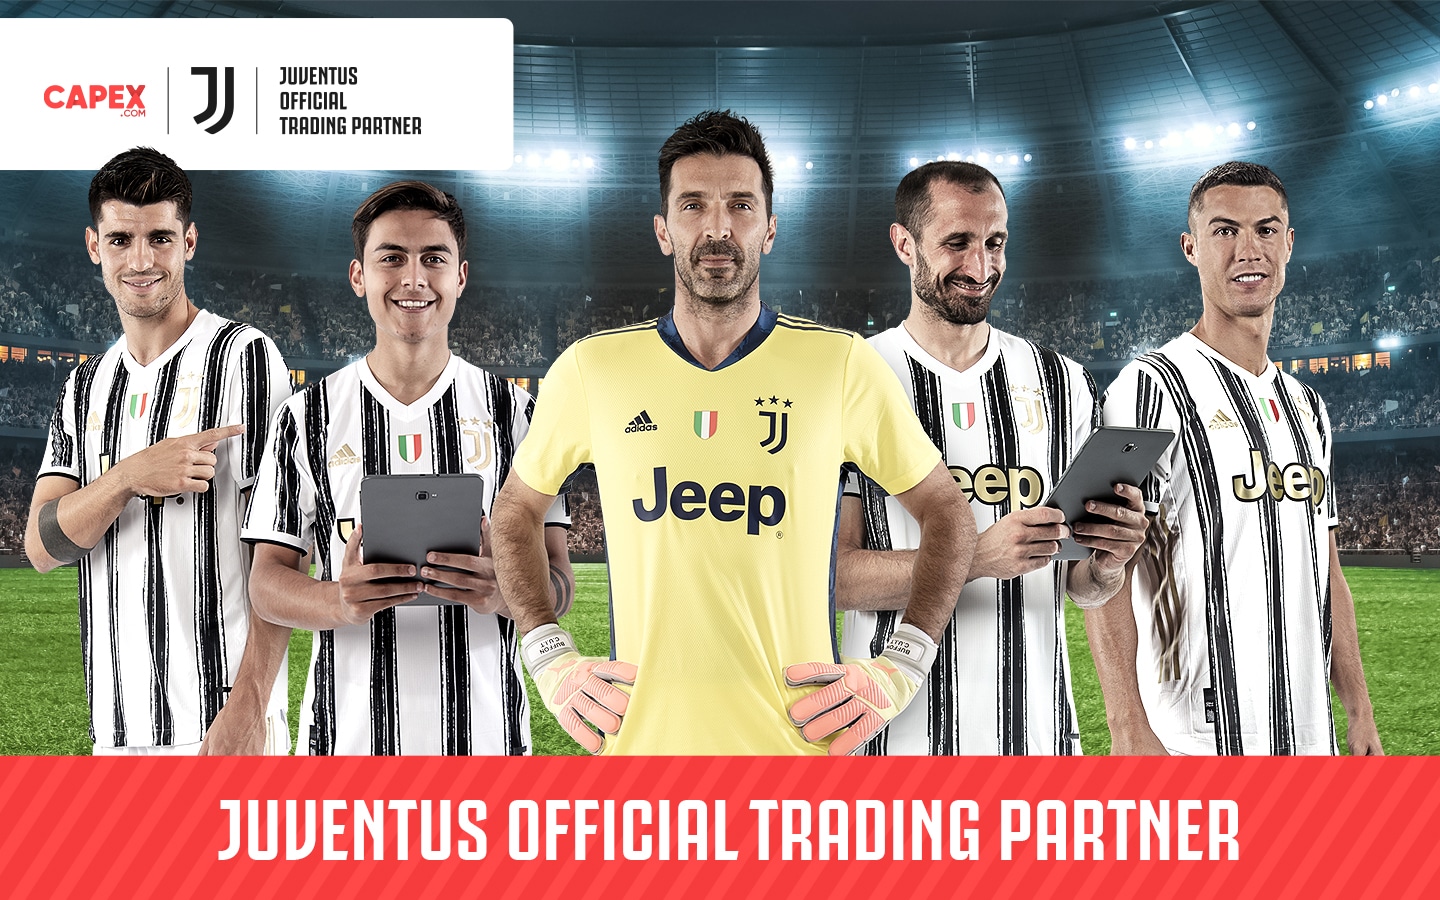 CAPEX.com Announces Sponsorship Deal with Juventus